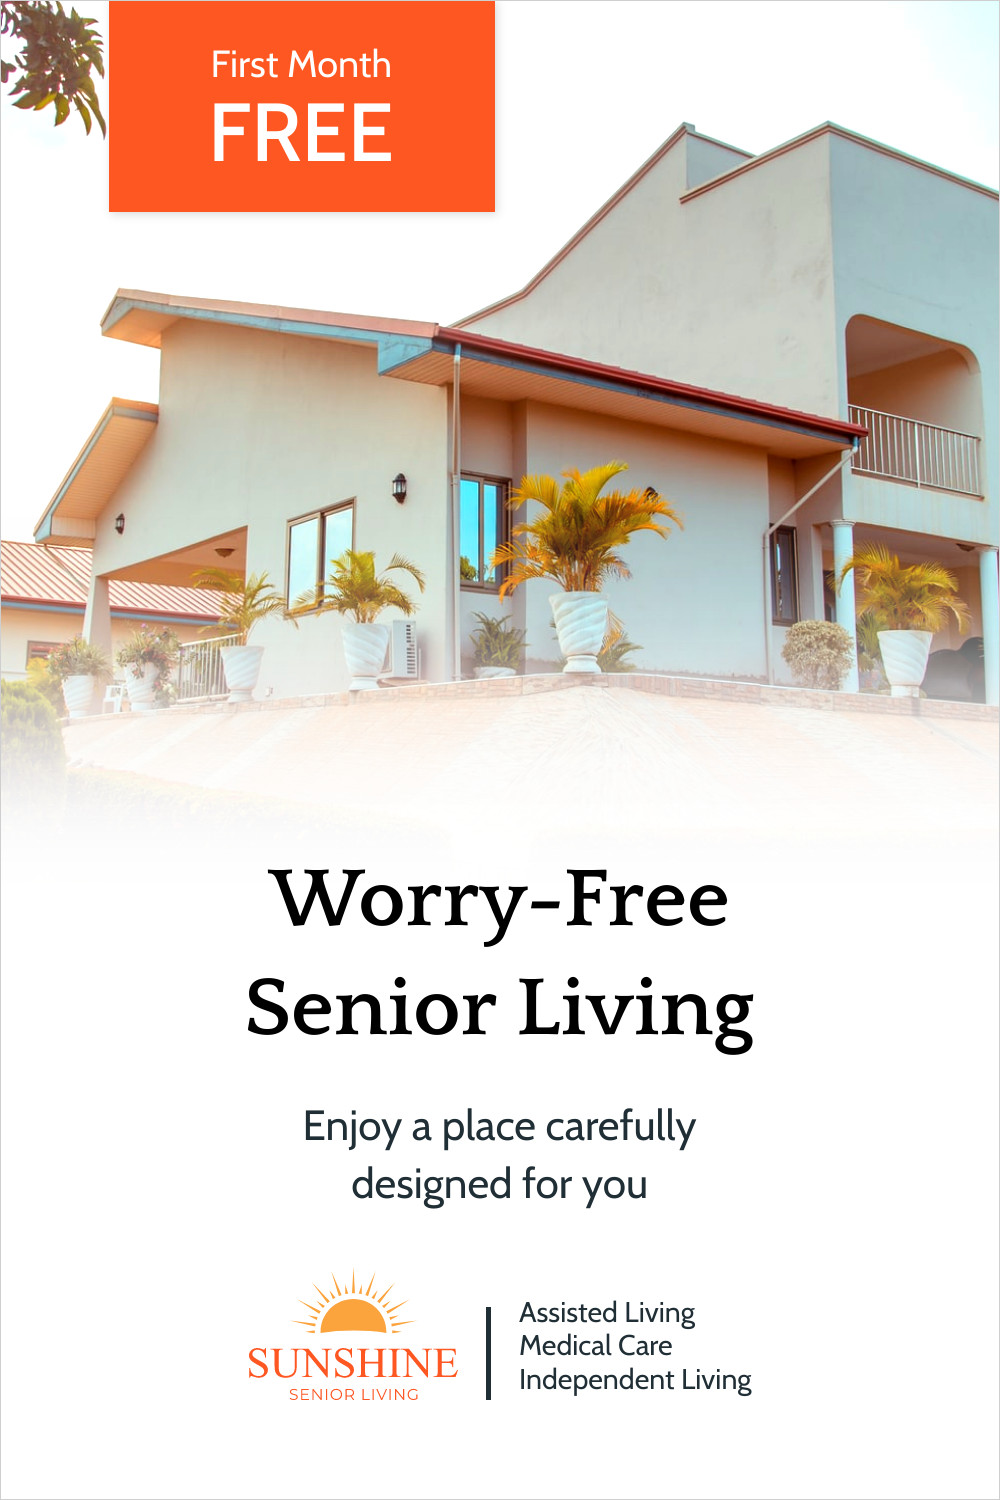 Worry-Free Senior Living